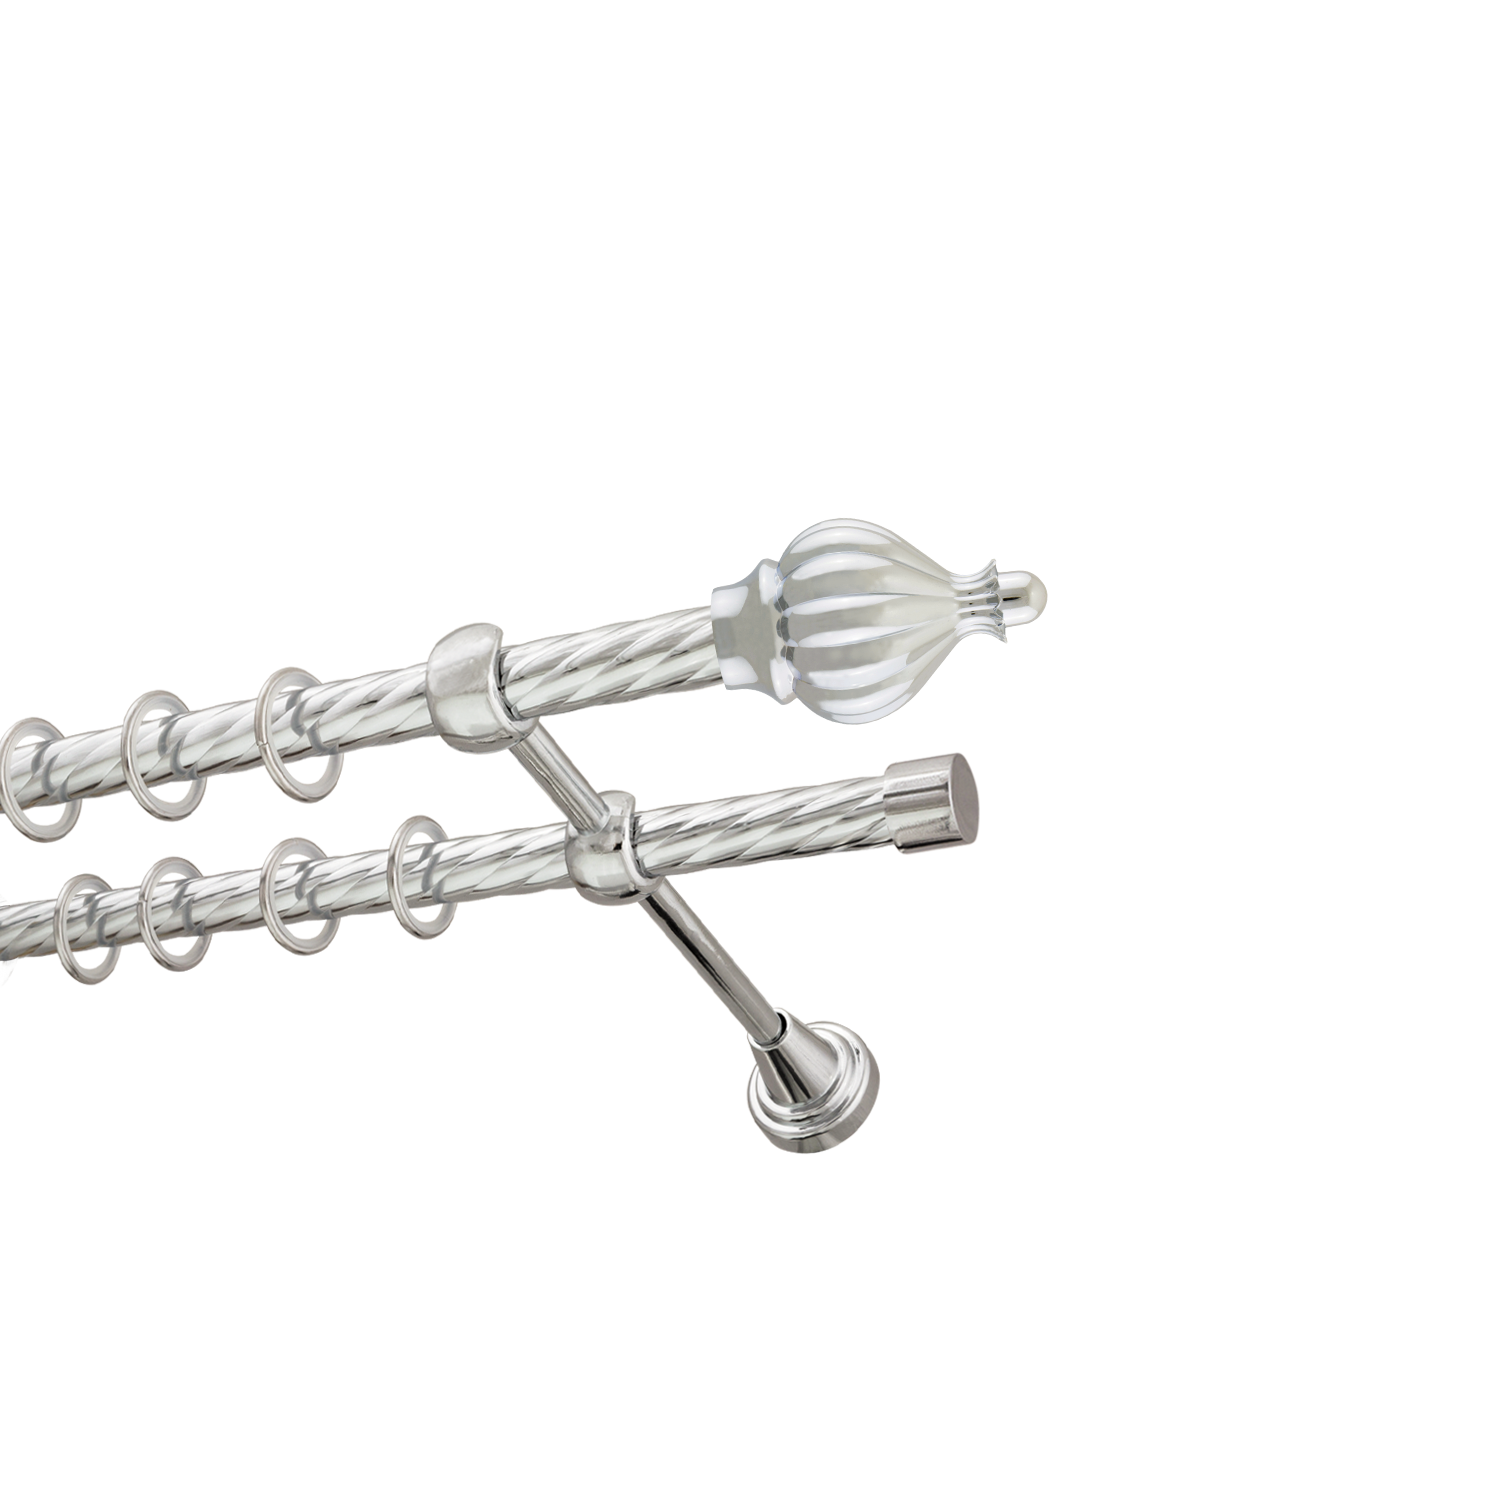 Металлический карниз для штор Афродита, двухрядный 16/16 мм, серебро, витая штанга, длина 140 см - фото Wikidecor.ru